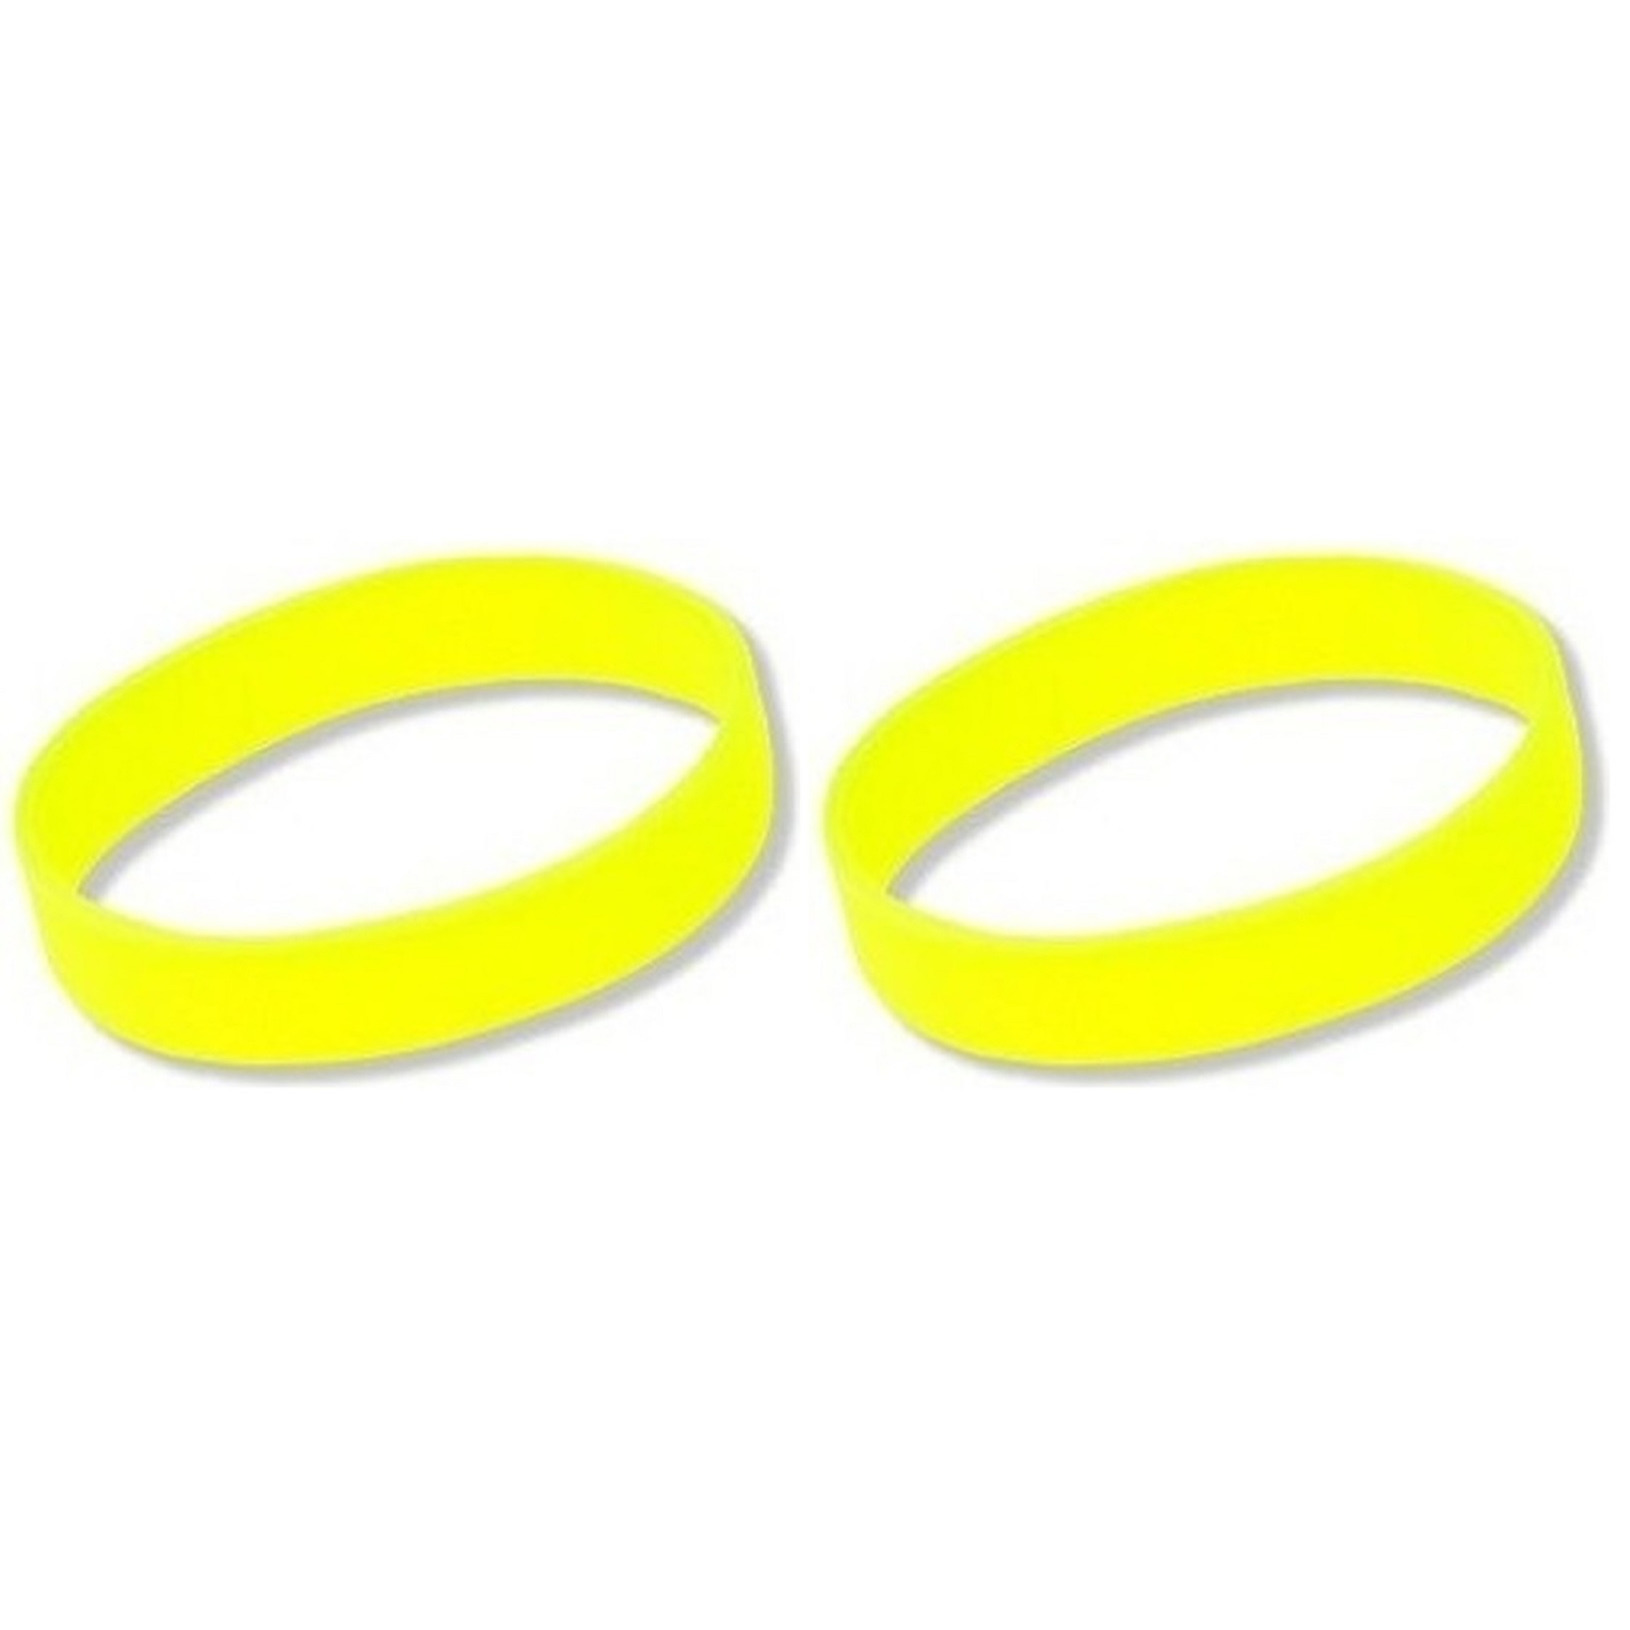 25x stuks siliconen armband neon geel